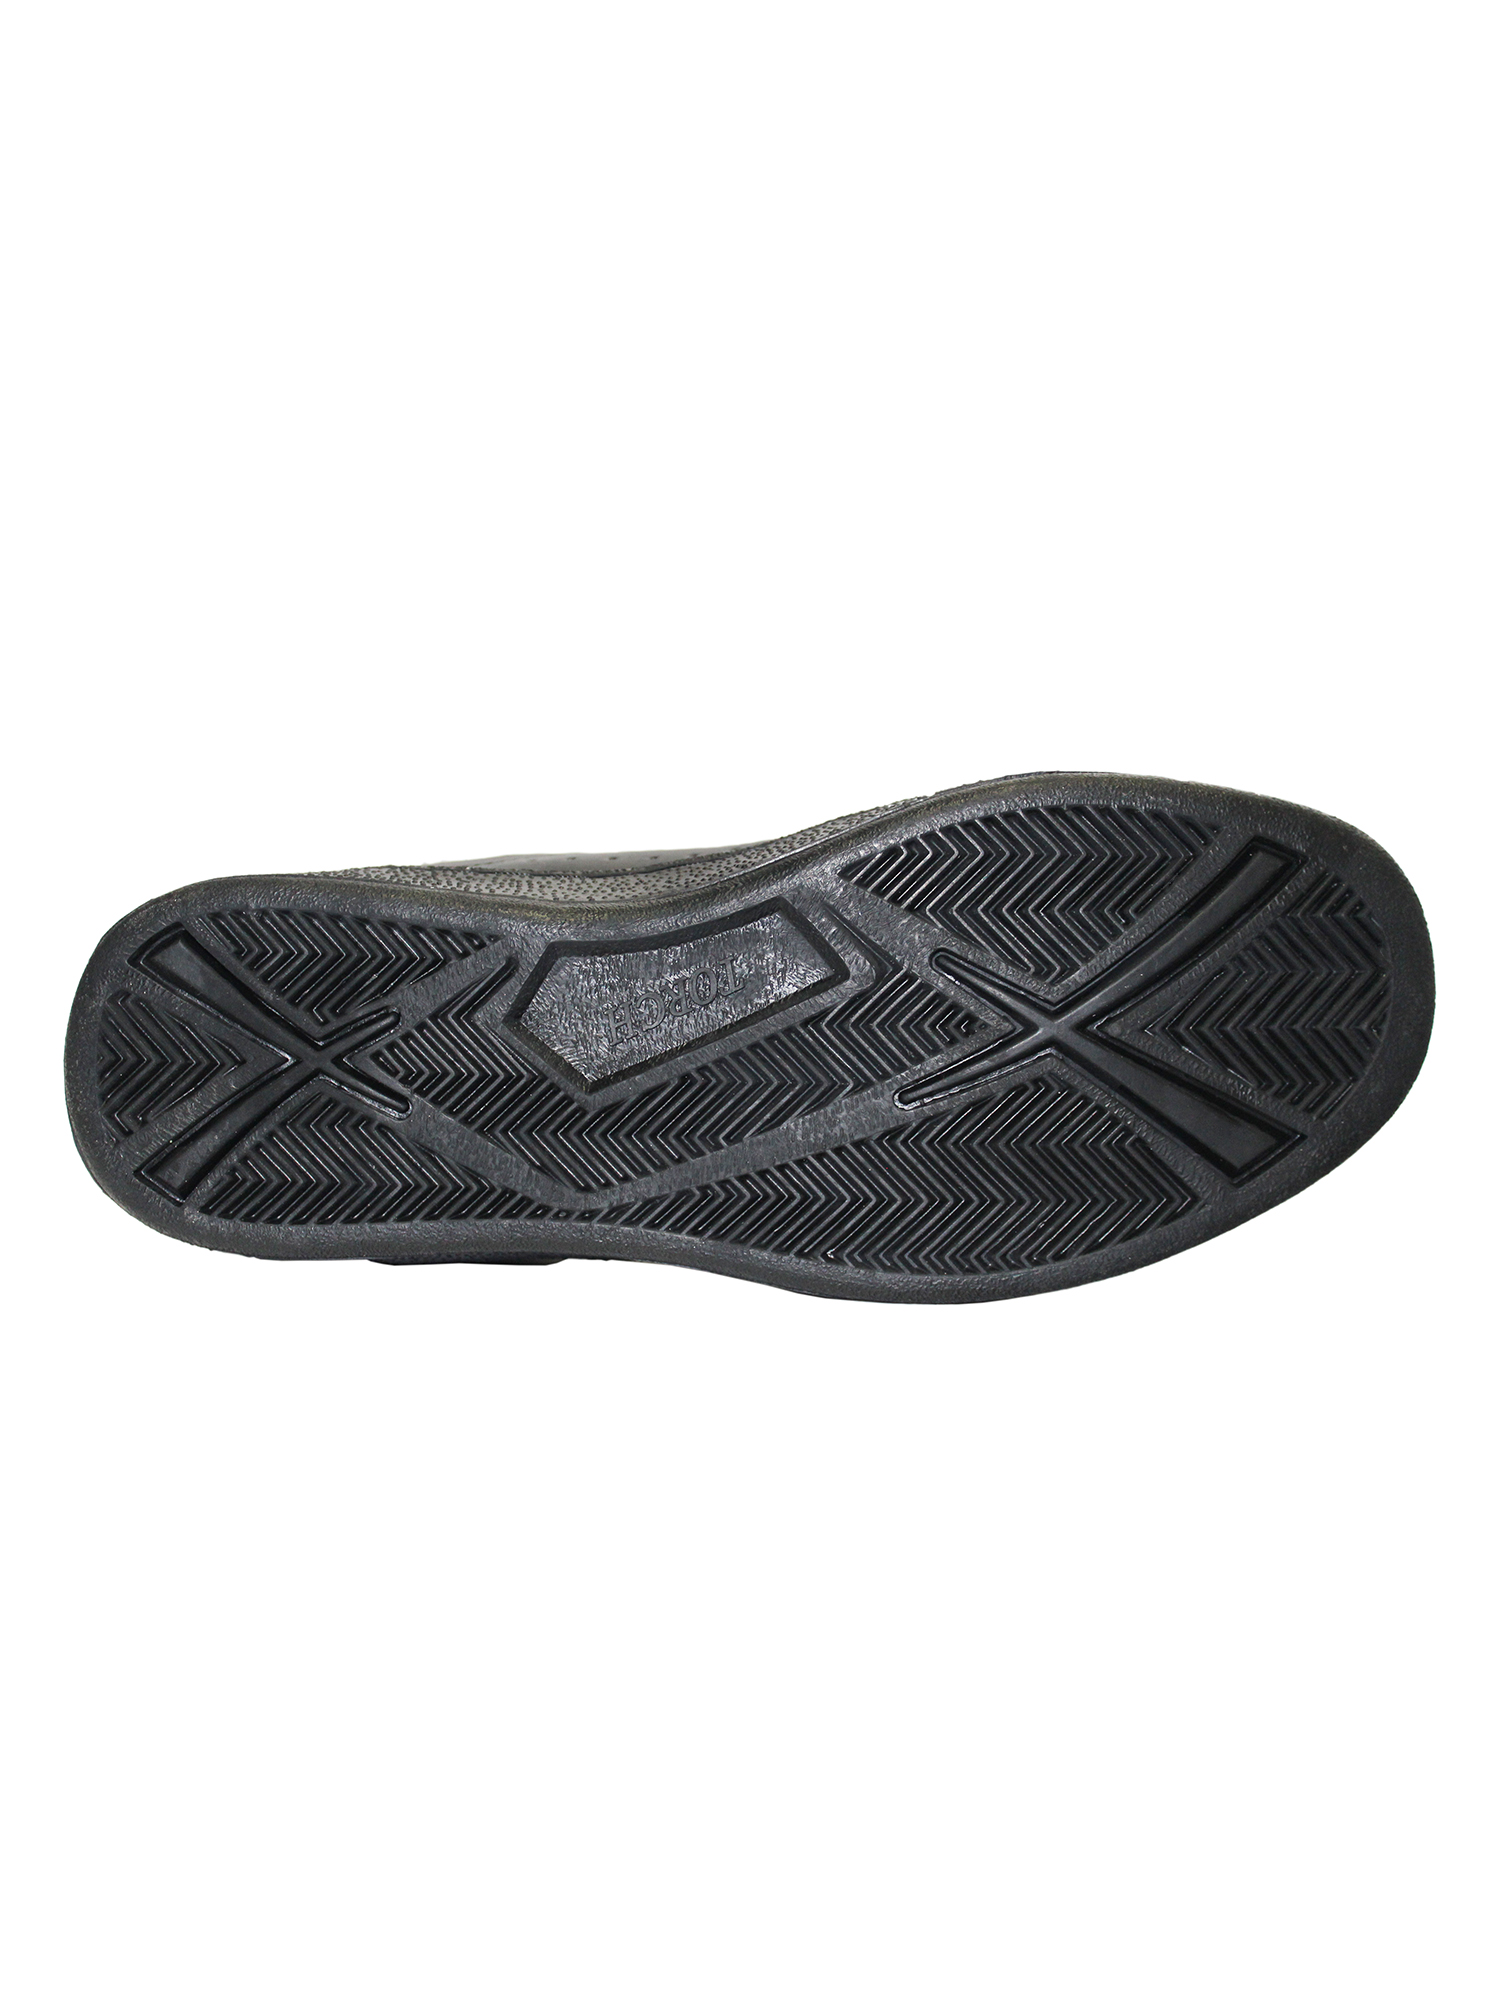 Tanleewa Men's Leather Strap Sneakers Lightweight Hook and Loop Walking Shoe Size 4.5 Adult Male - image 3 of 4